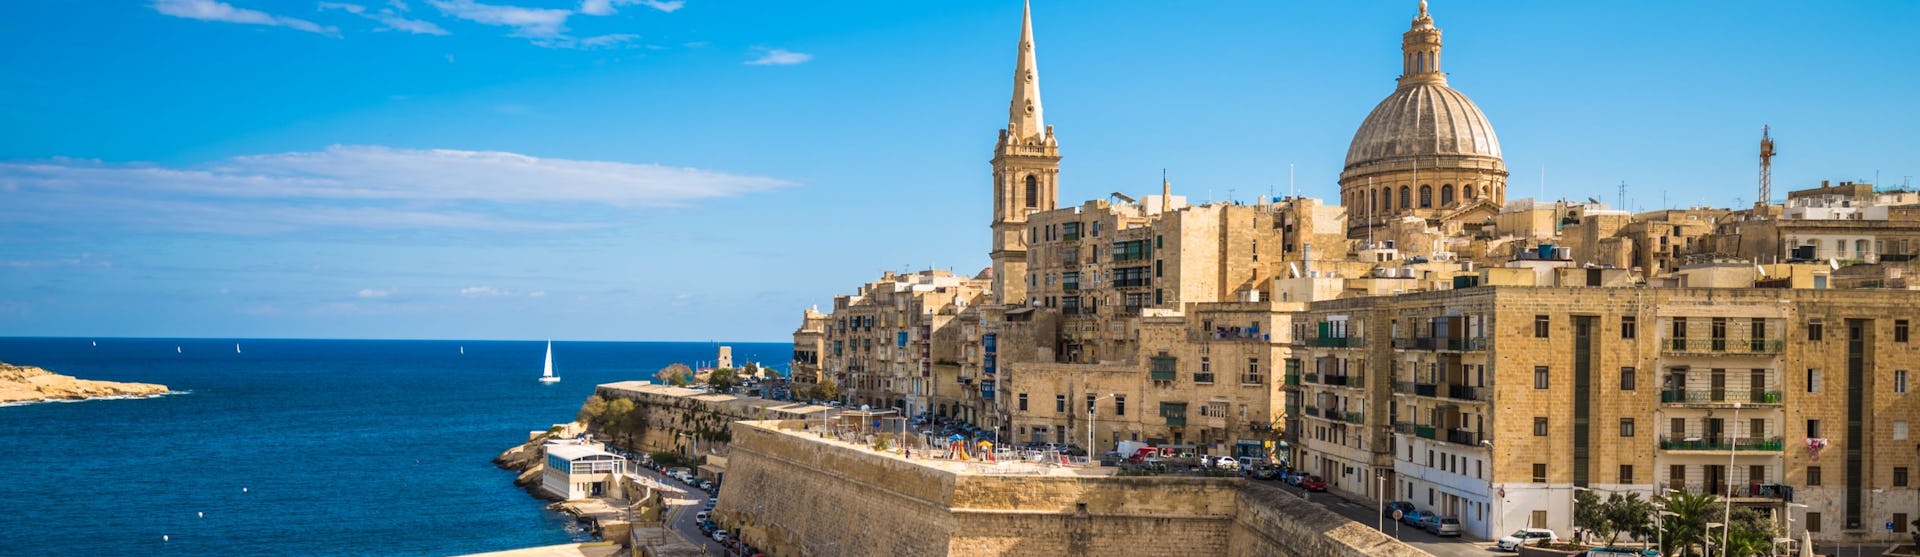 Malta-Valletta-Mediterranean 